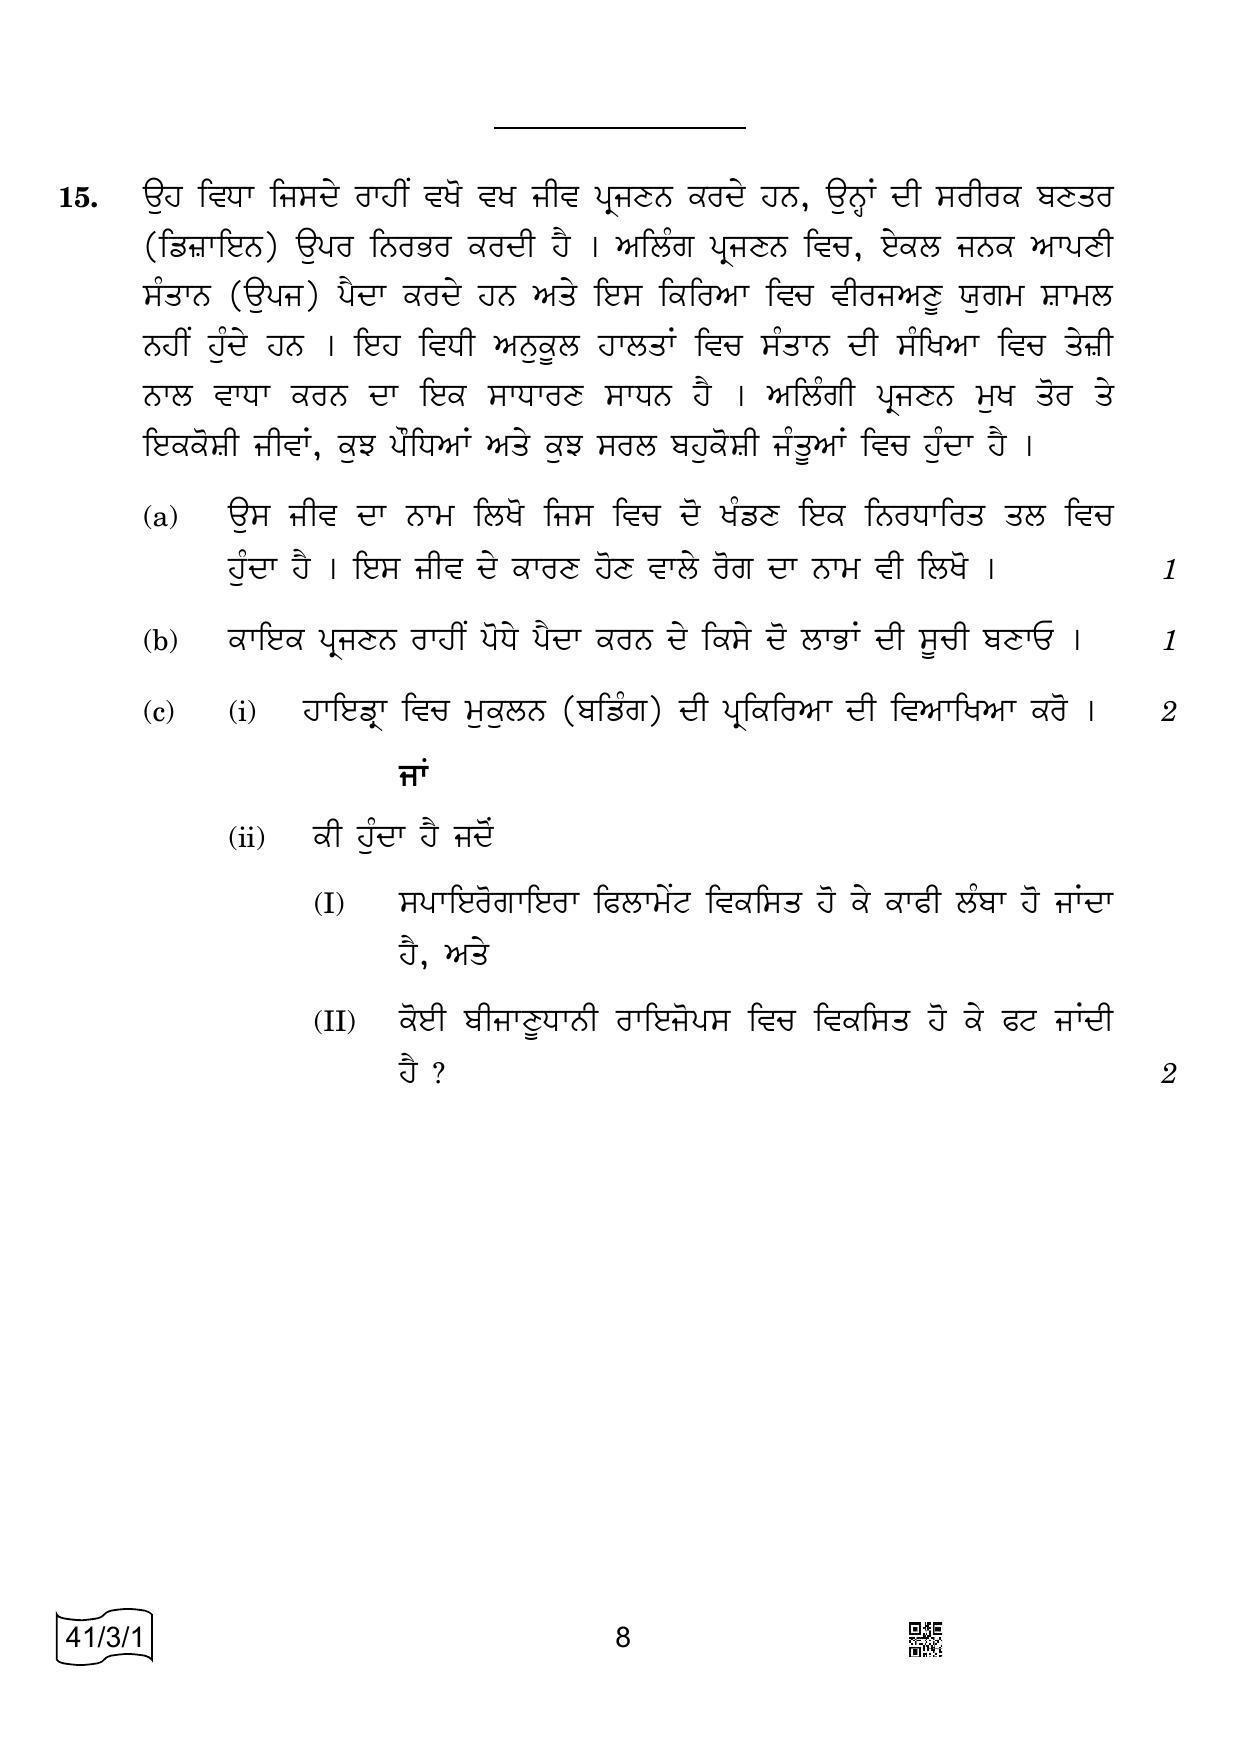 CBSE Class 10 41-3-1 Science Punjabi Version 2022 Question Paper - Page 8